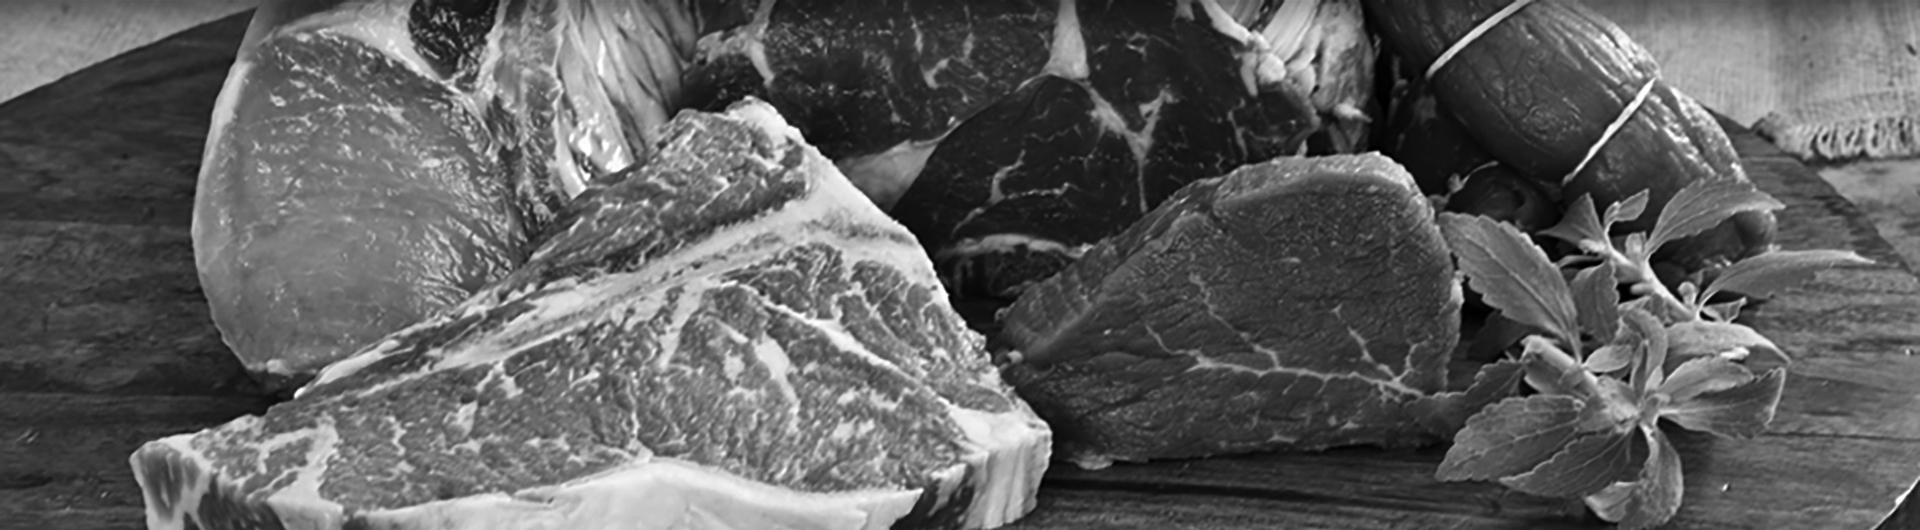 butcher-banner-meats-1920x530-BW